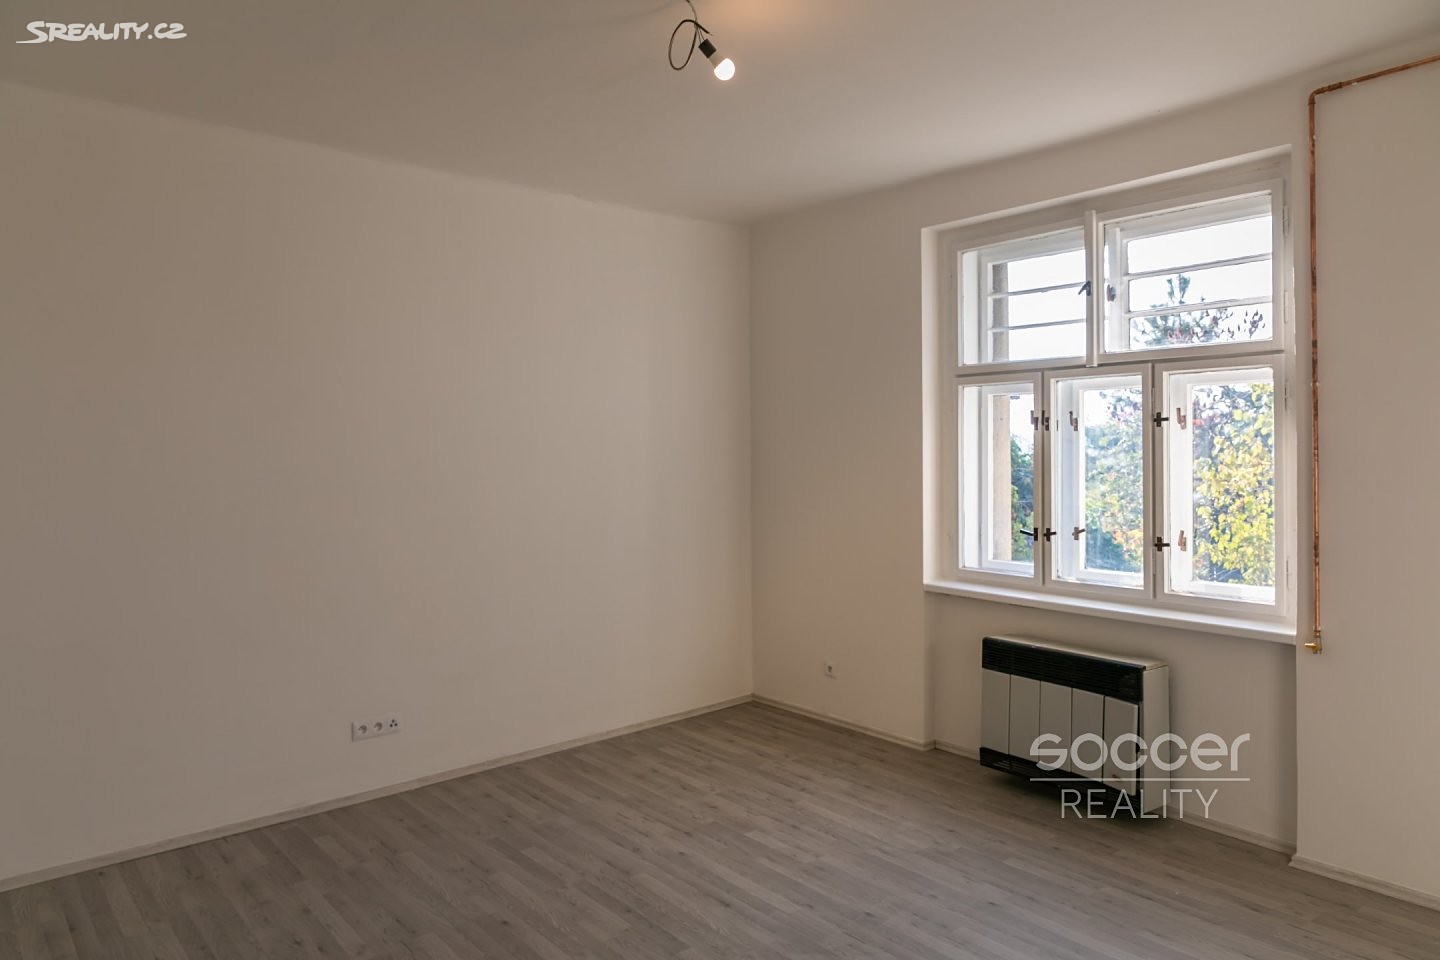 Prodej bytu 1+1 41 m², Zenklova, Praha 8 - Libeň